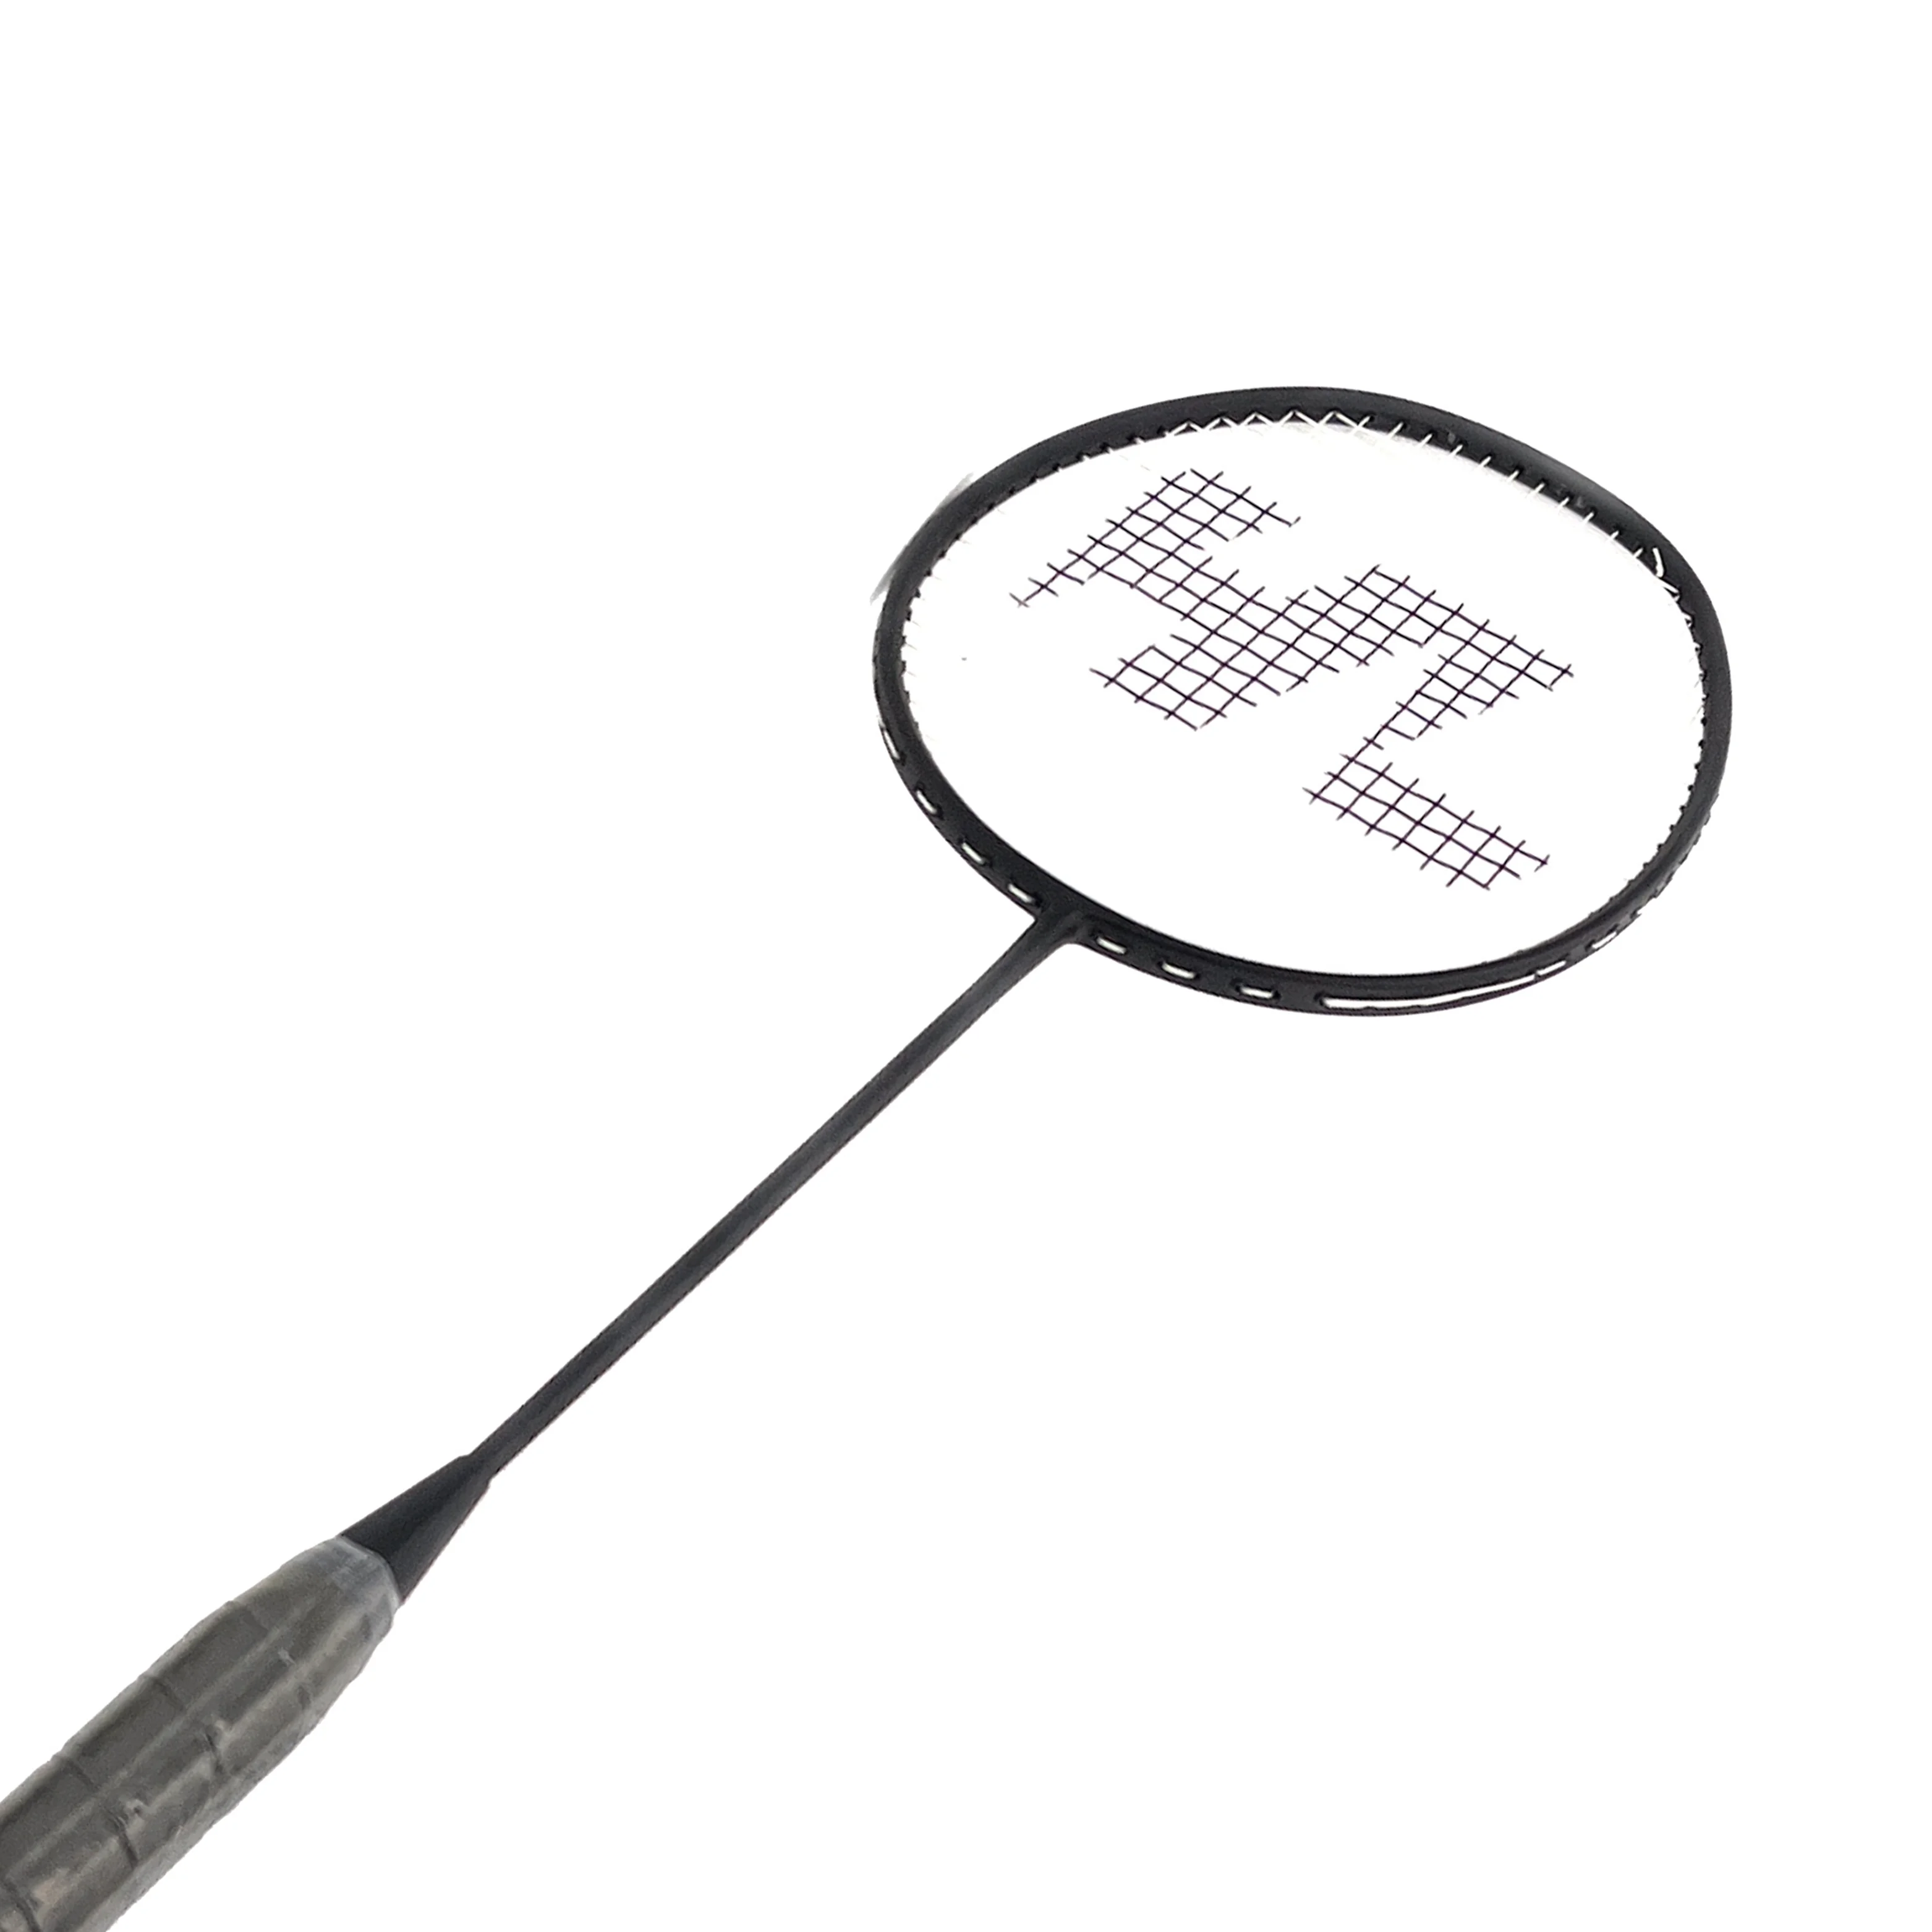 

Professional High quality Light badminton racket carbon fiber racket racquet